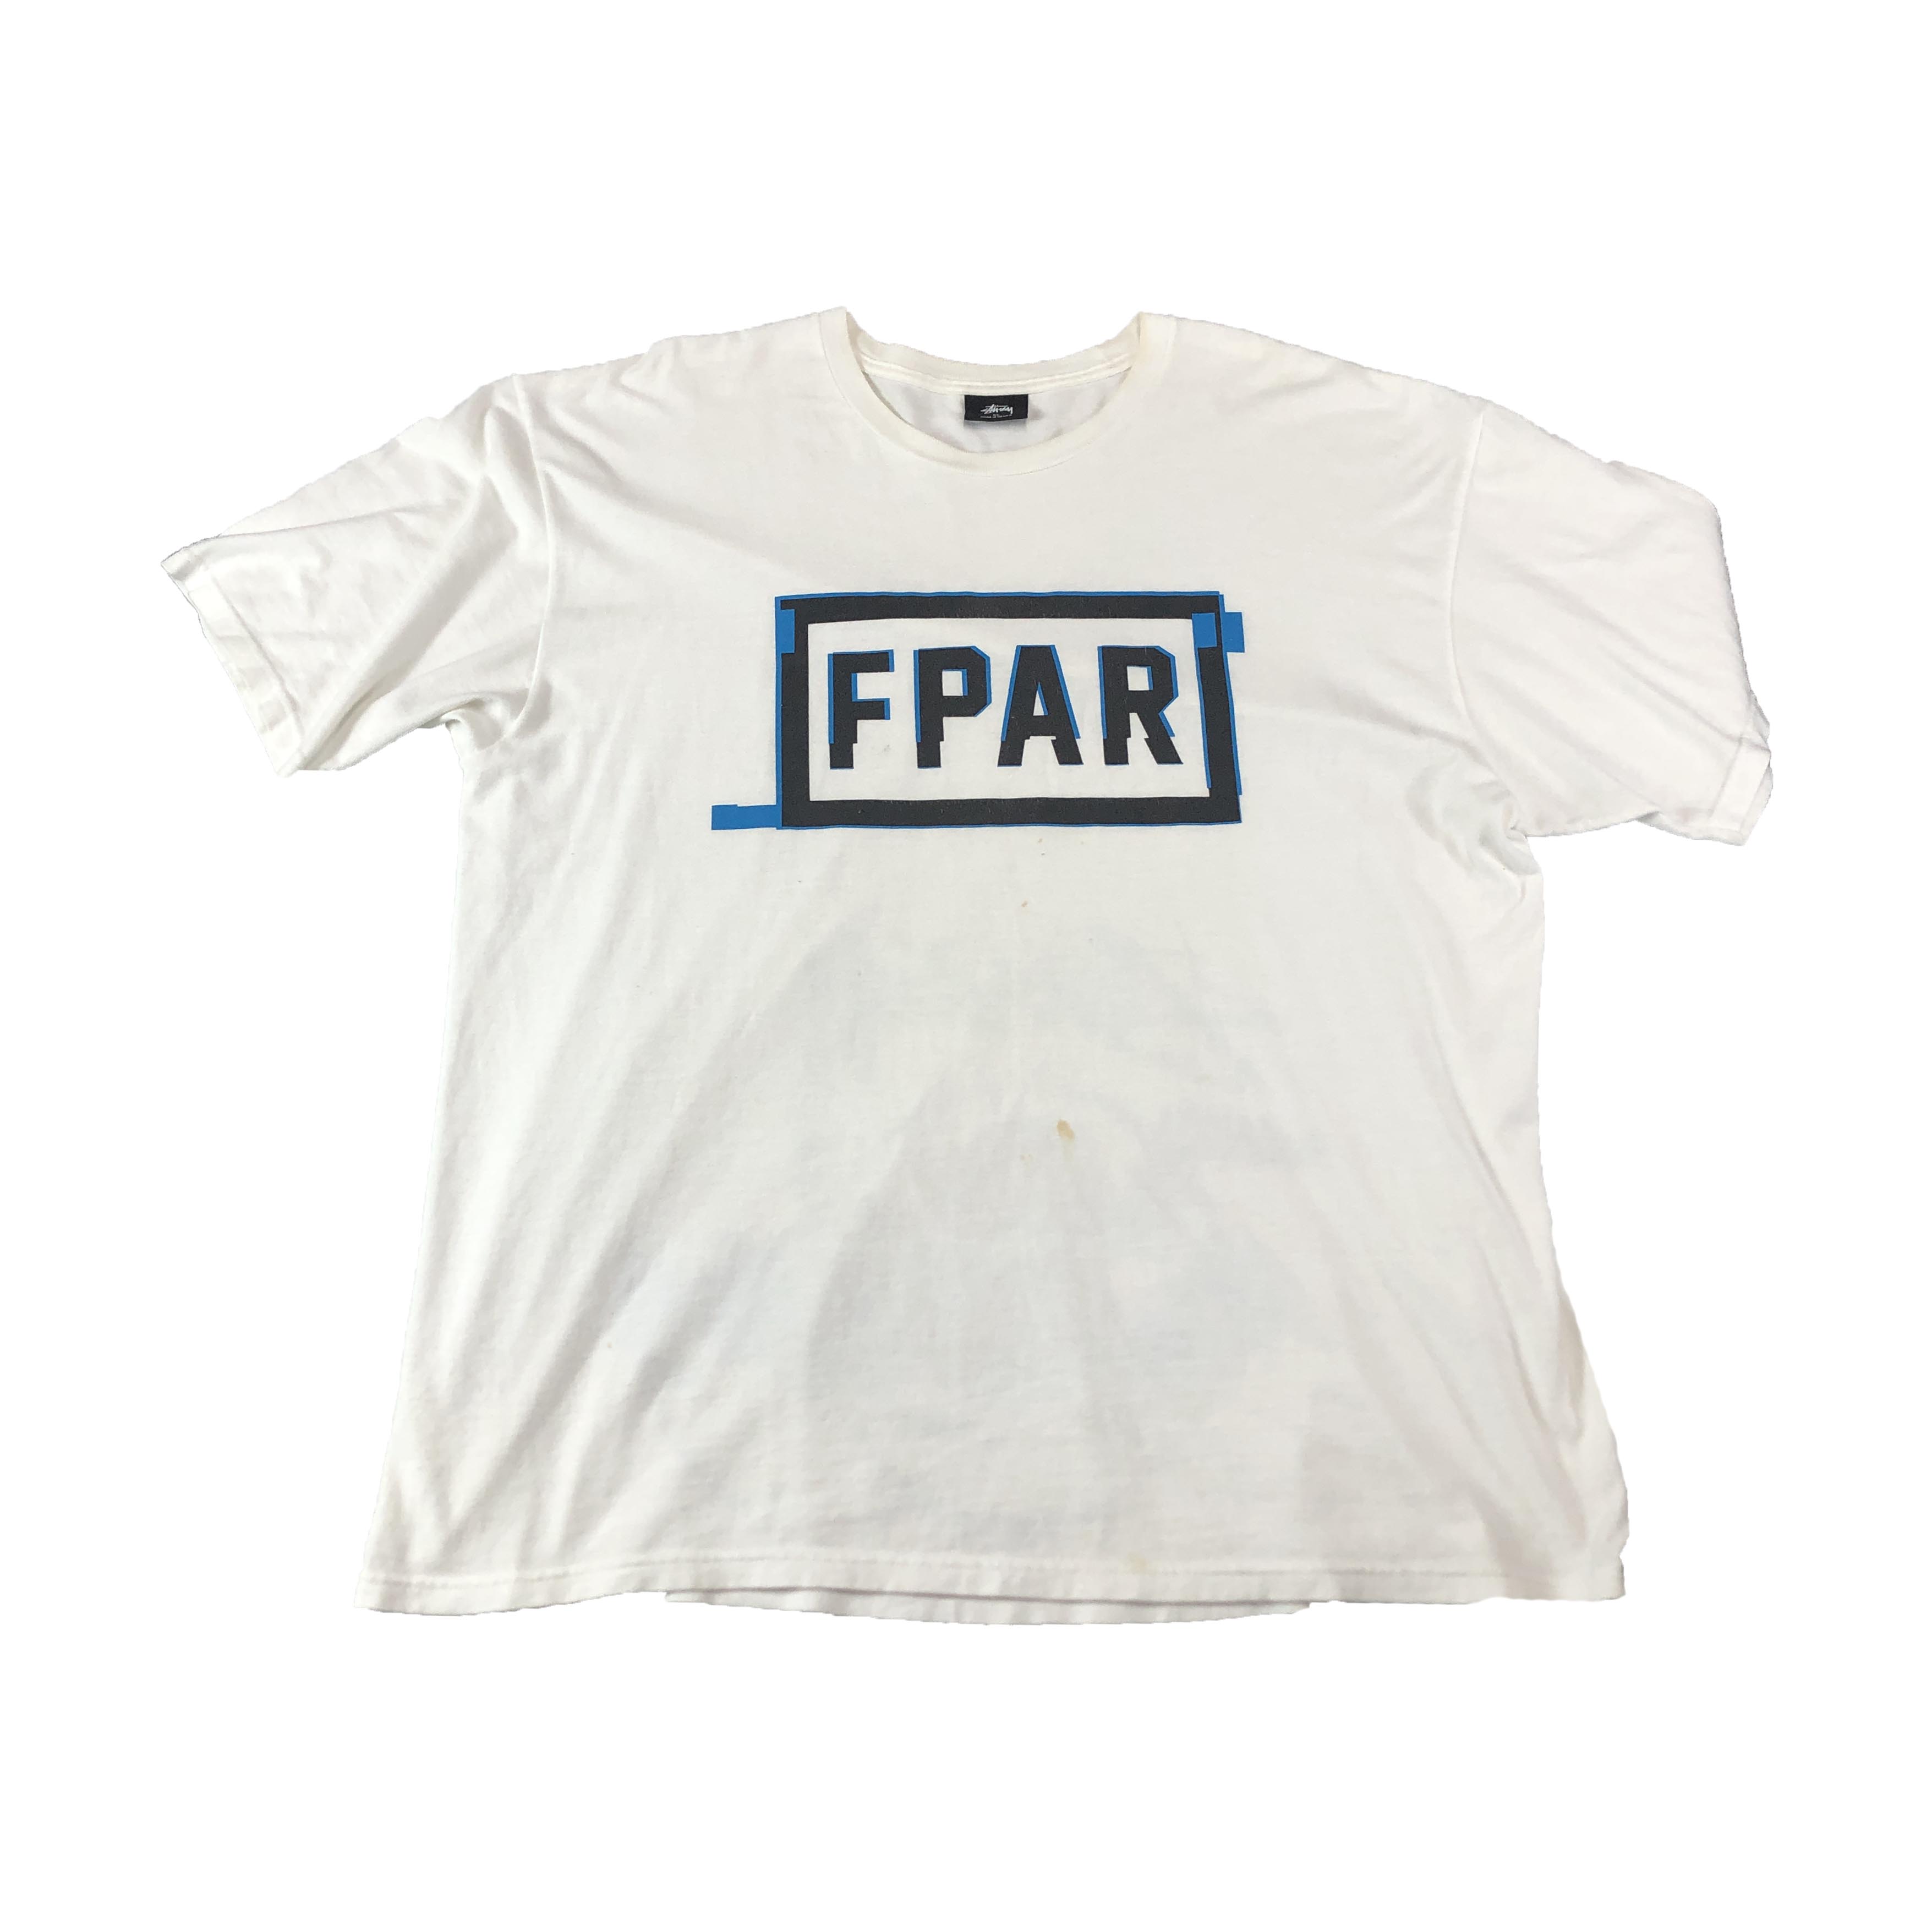 [Stussy x Fpar] Stussy x FPAR T-shirt WH - Size XL